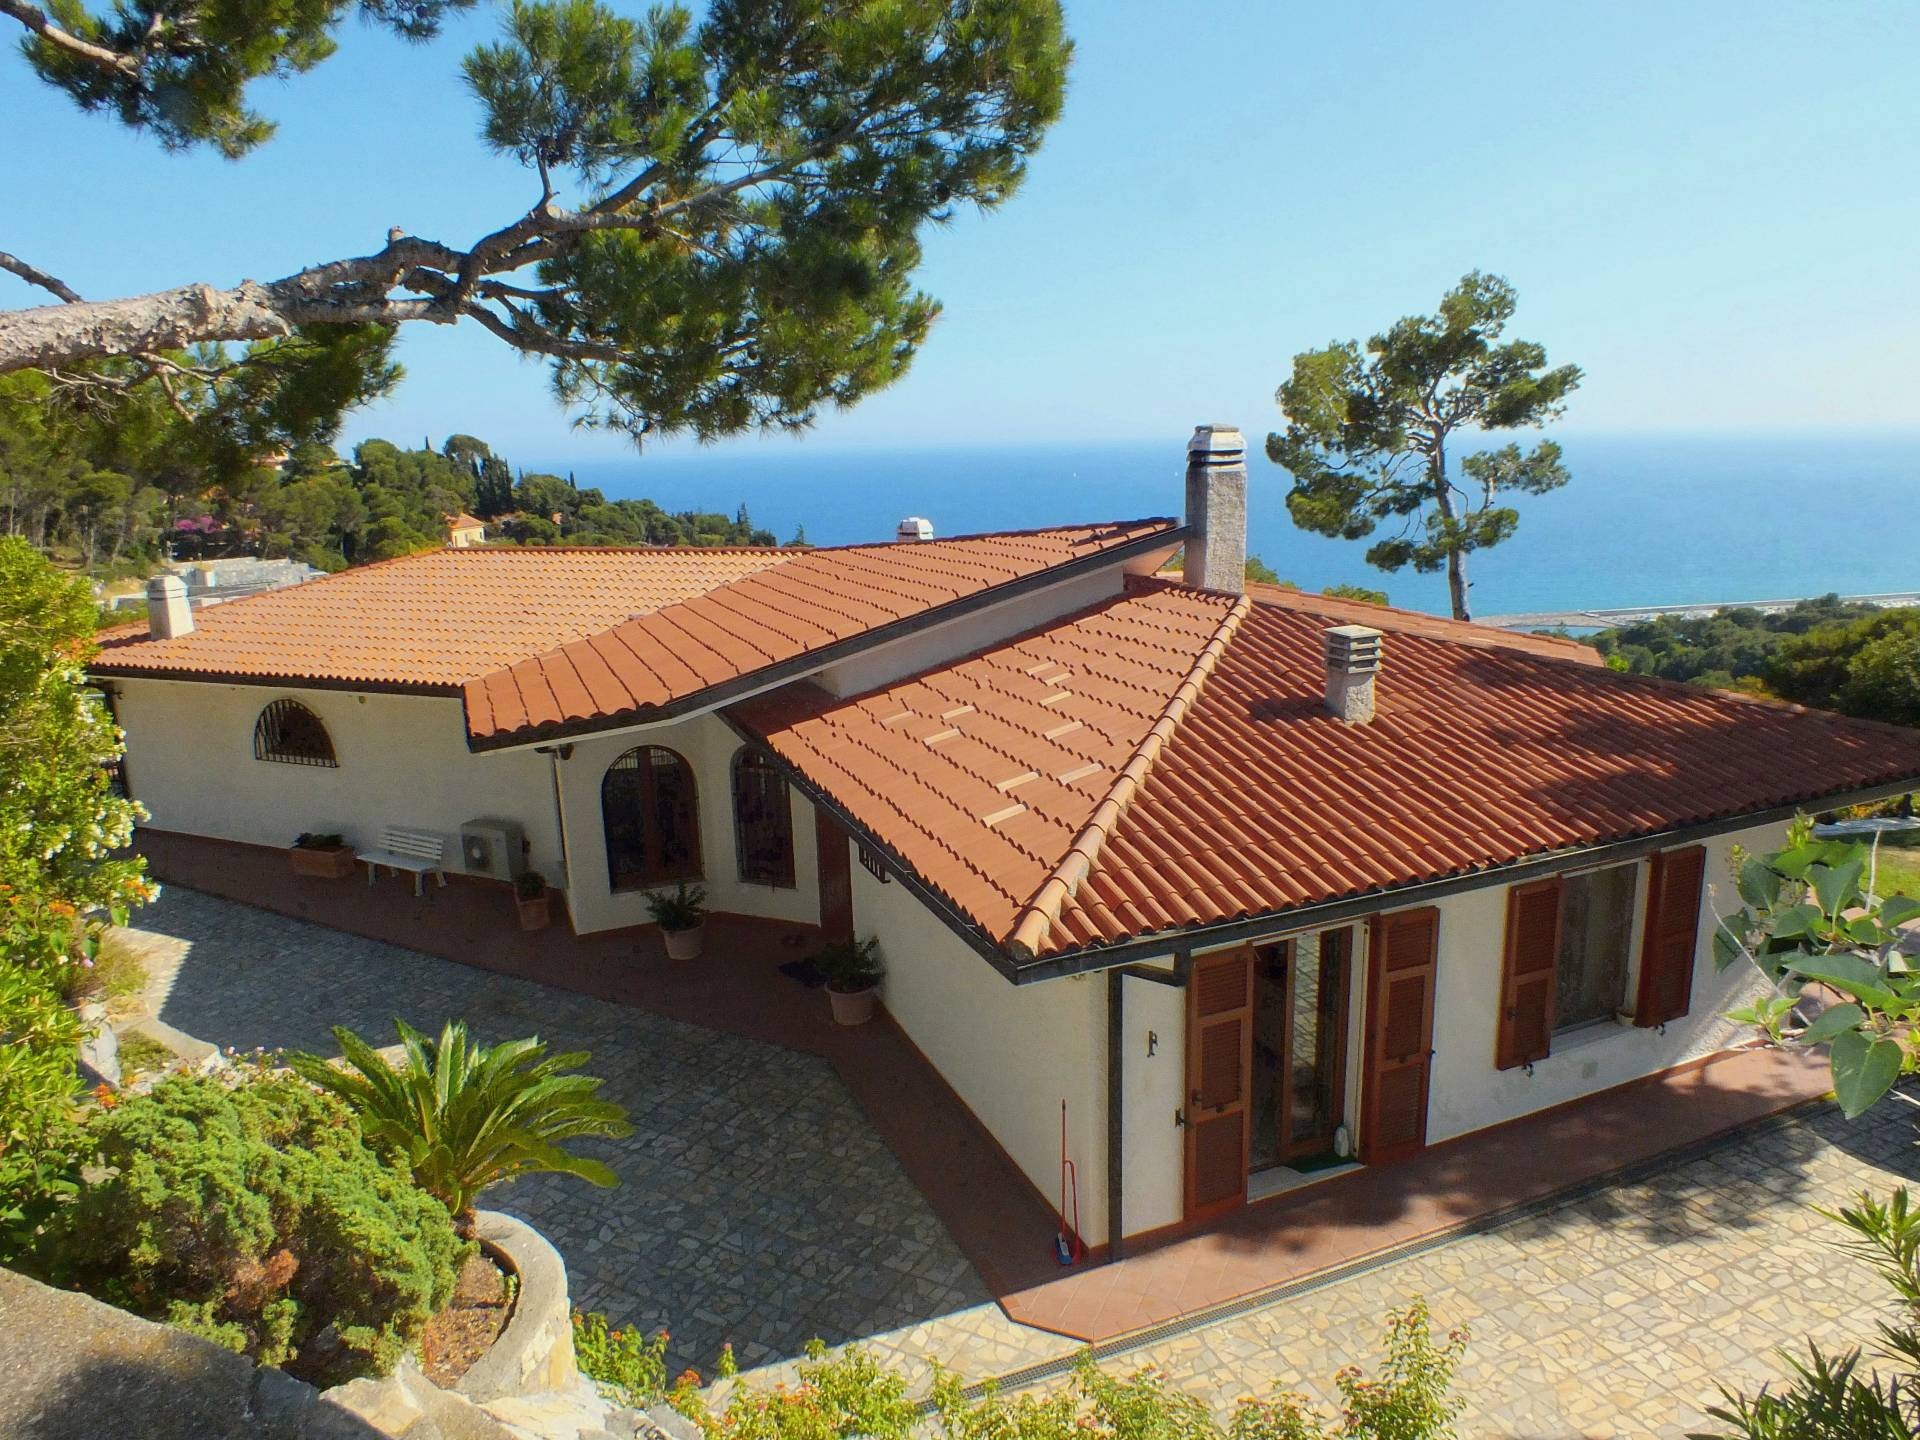 7 bedroom Villa for sale with sea view in Andora, Liguria